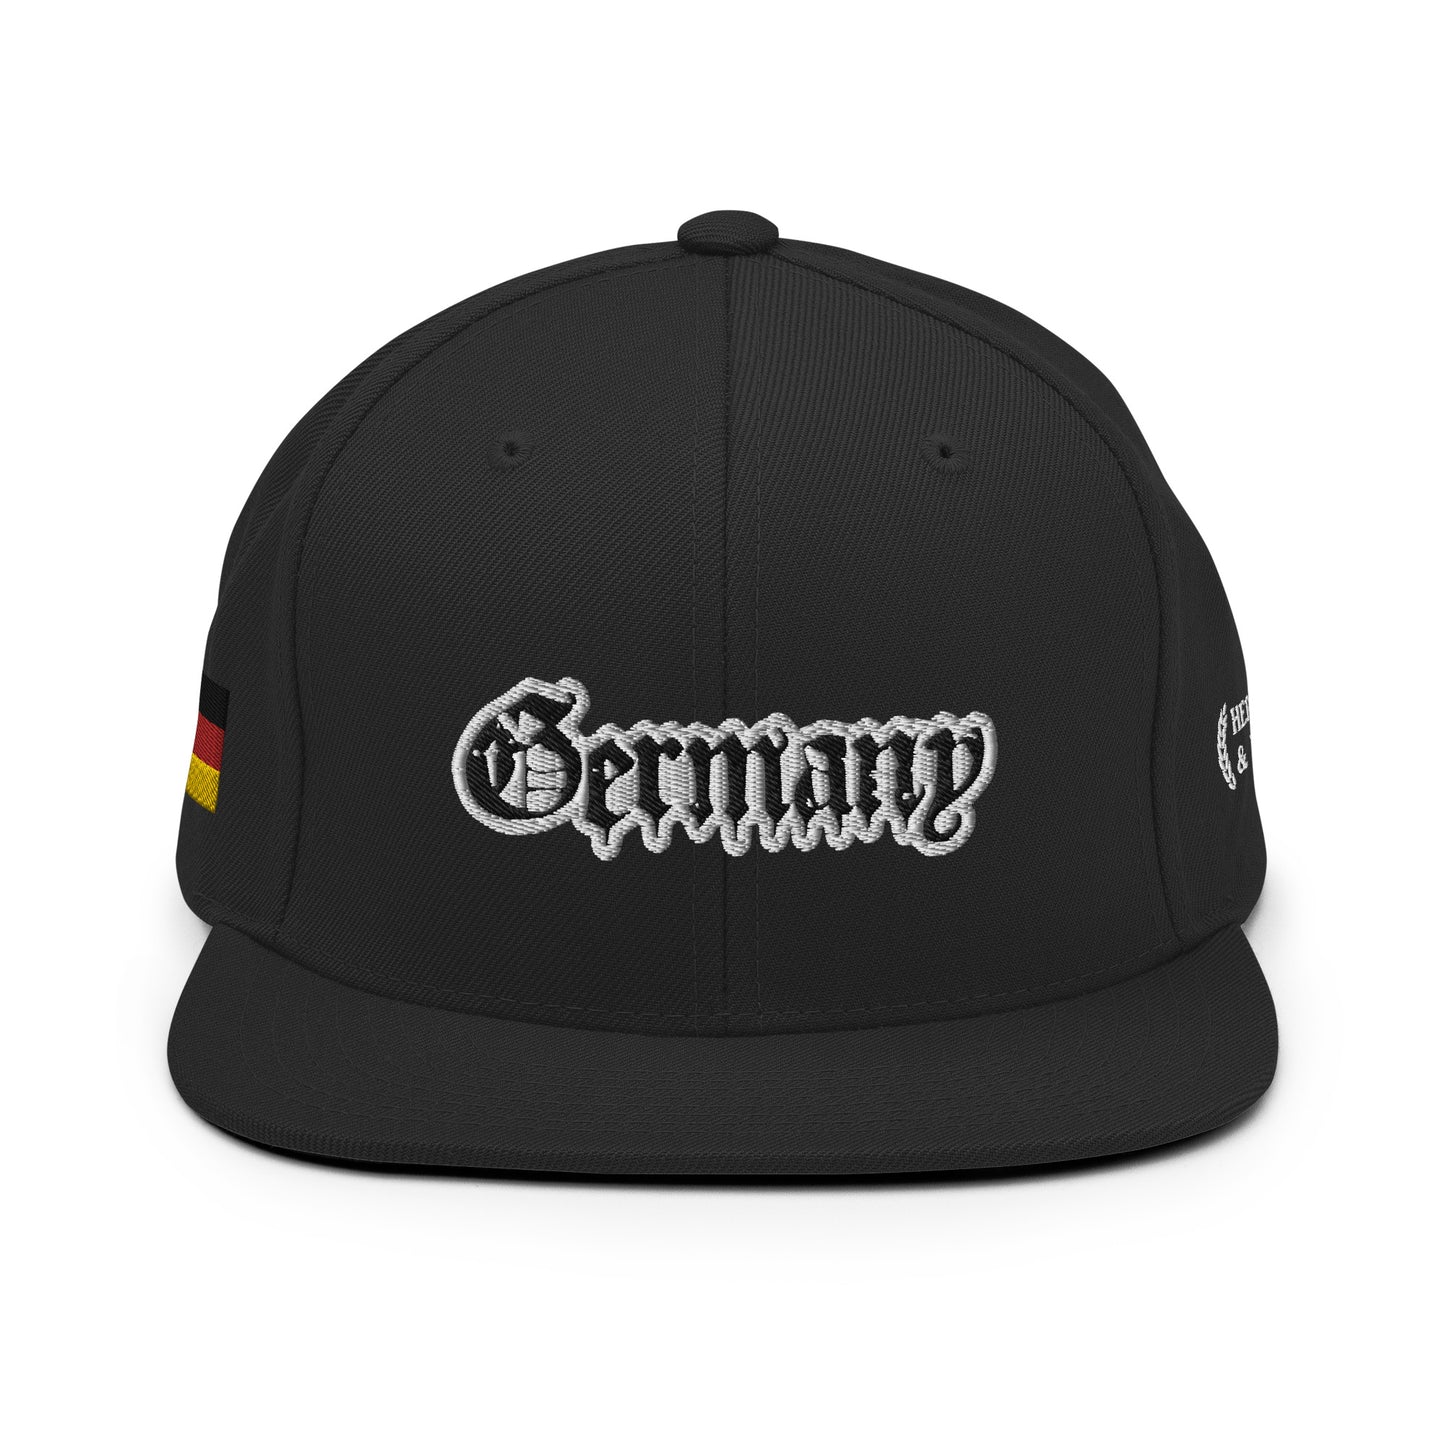 Heritage & Honor Snapback Cap 'Germany'